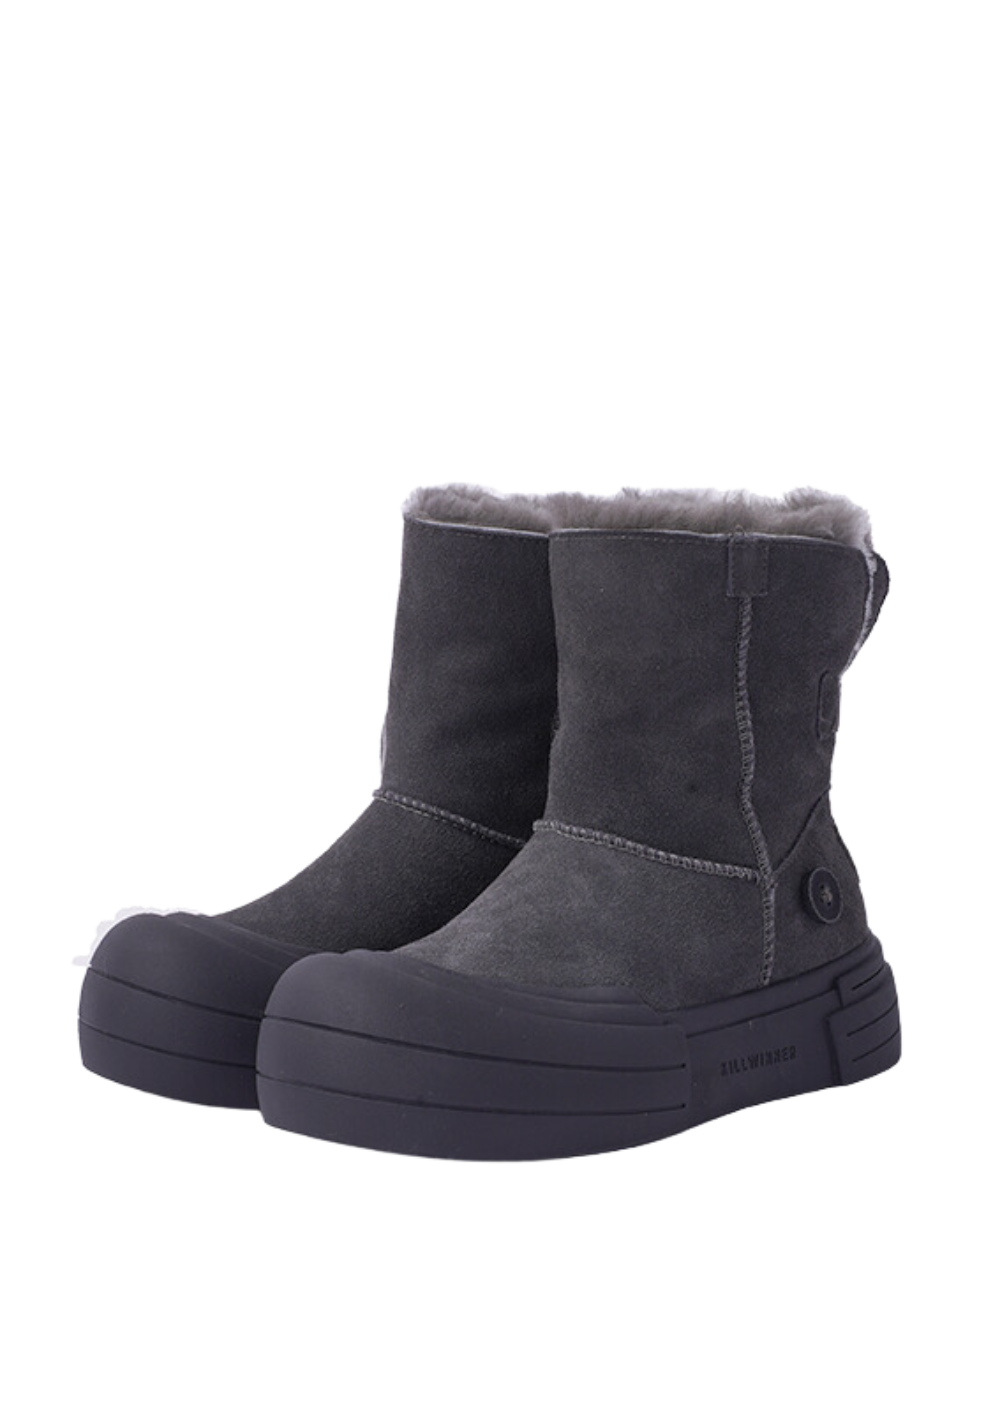 Suede Snow Boots - PSYLOS 1, Suede Snow Boots, Shoes, KILLWINNER, PSYLOS 1